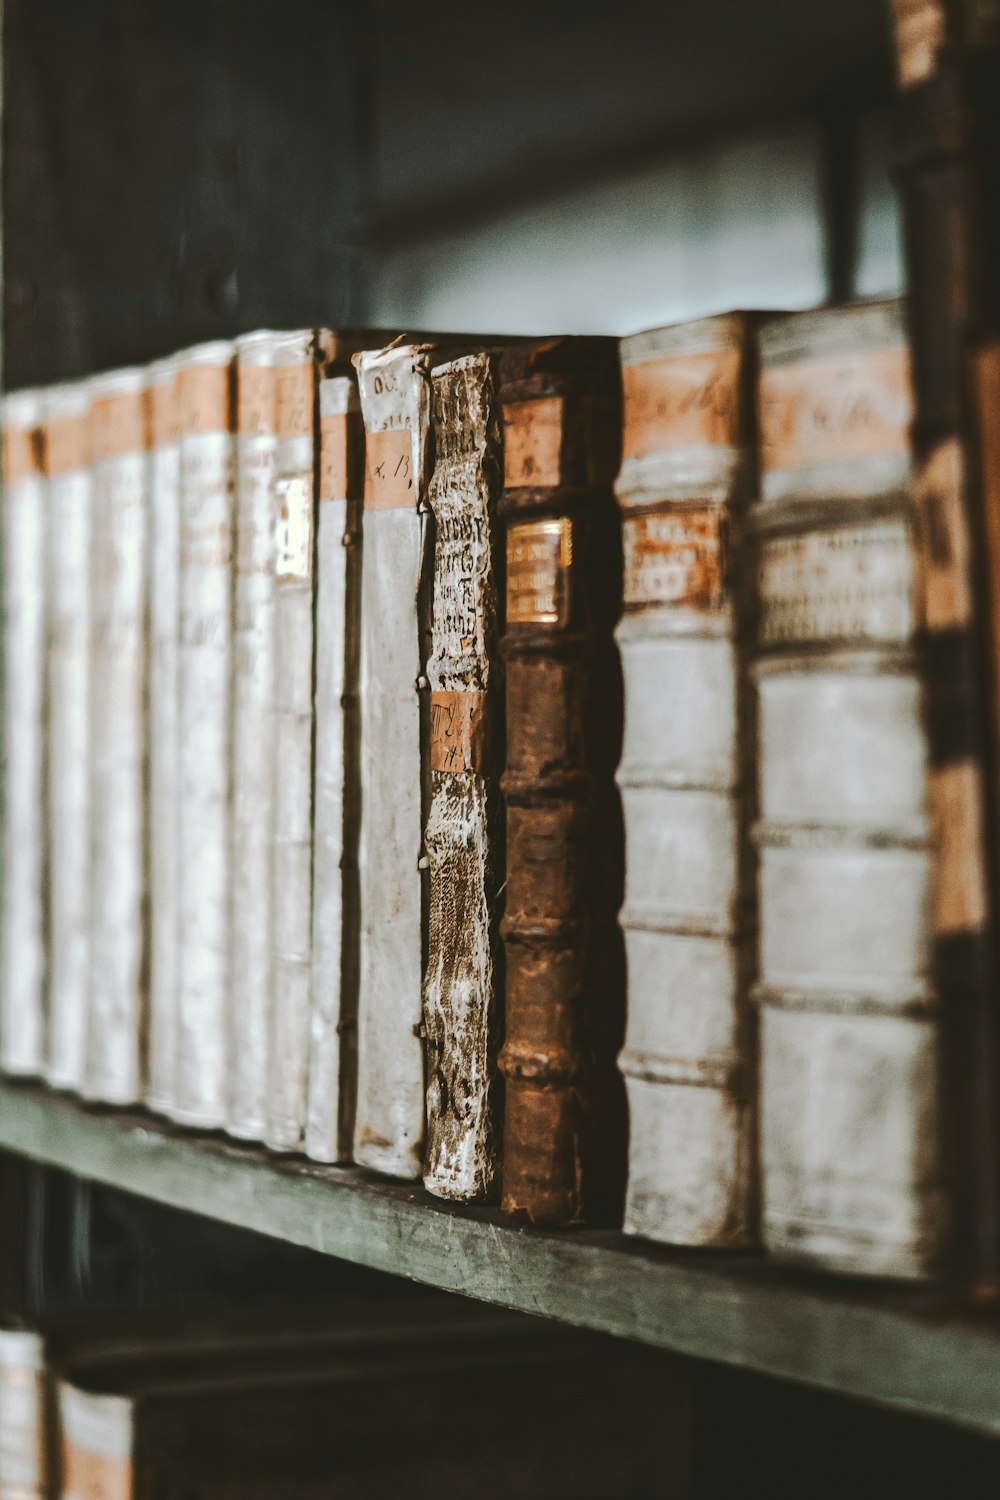 una fila di libri seduti in cima a uno scaffale di legno